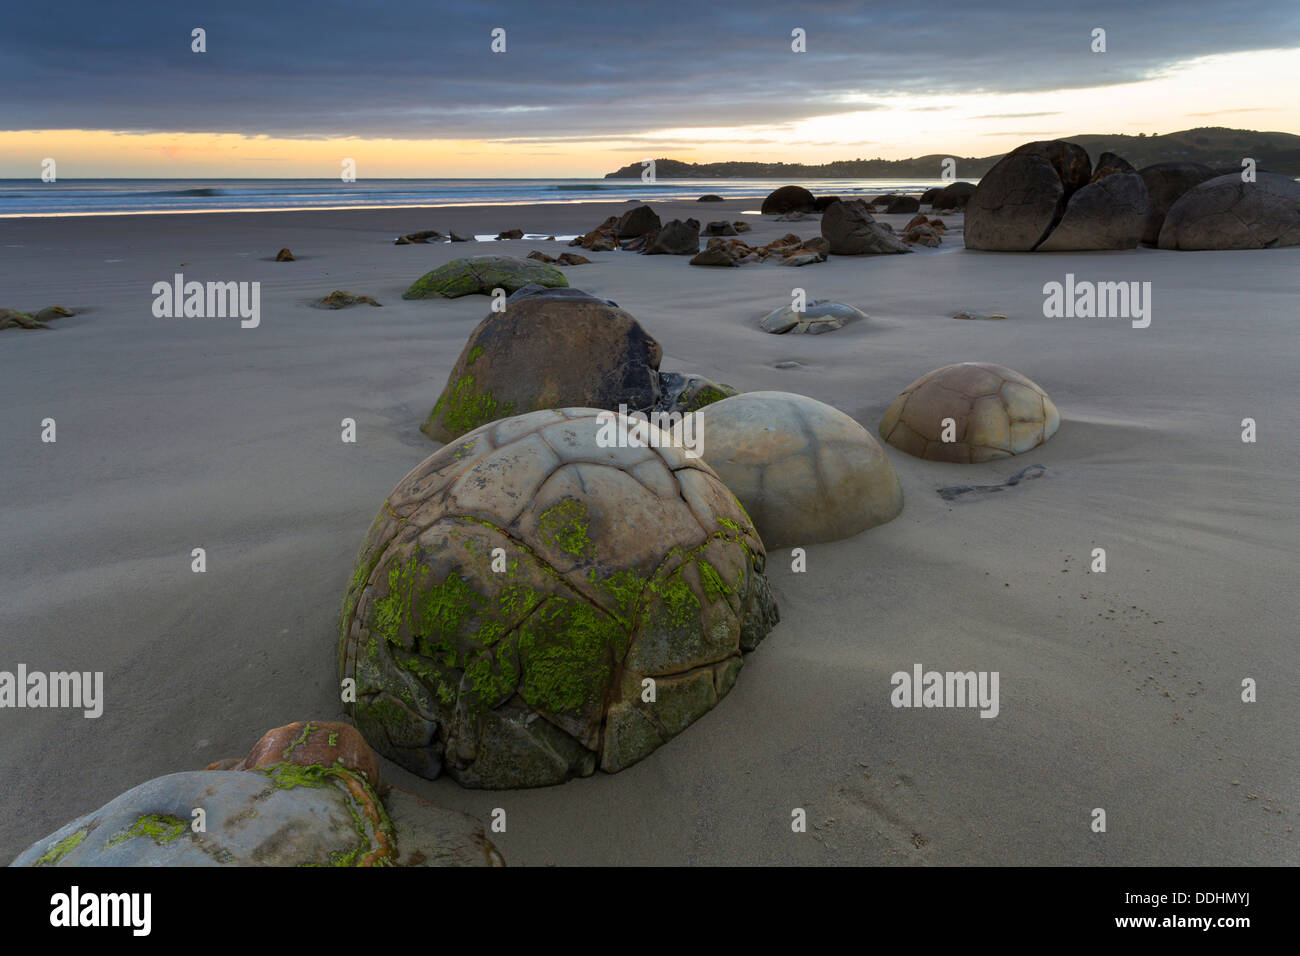 Moeraki Boulders on the beach at dawn Stock Photo